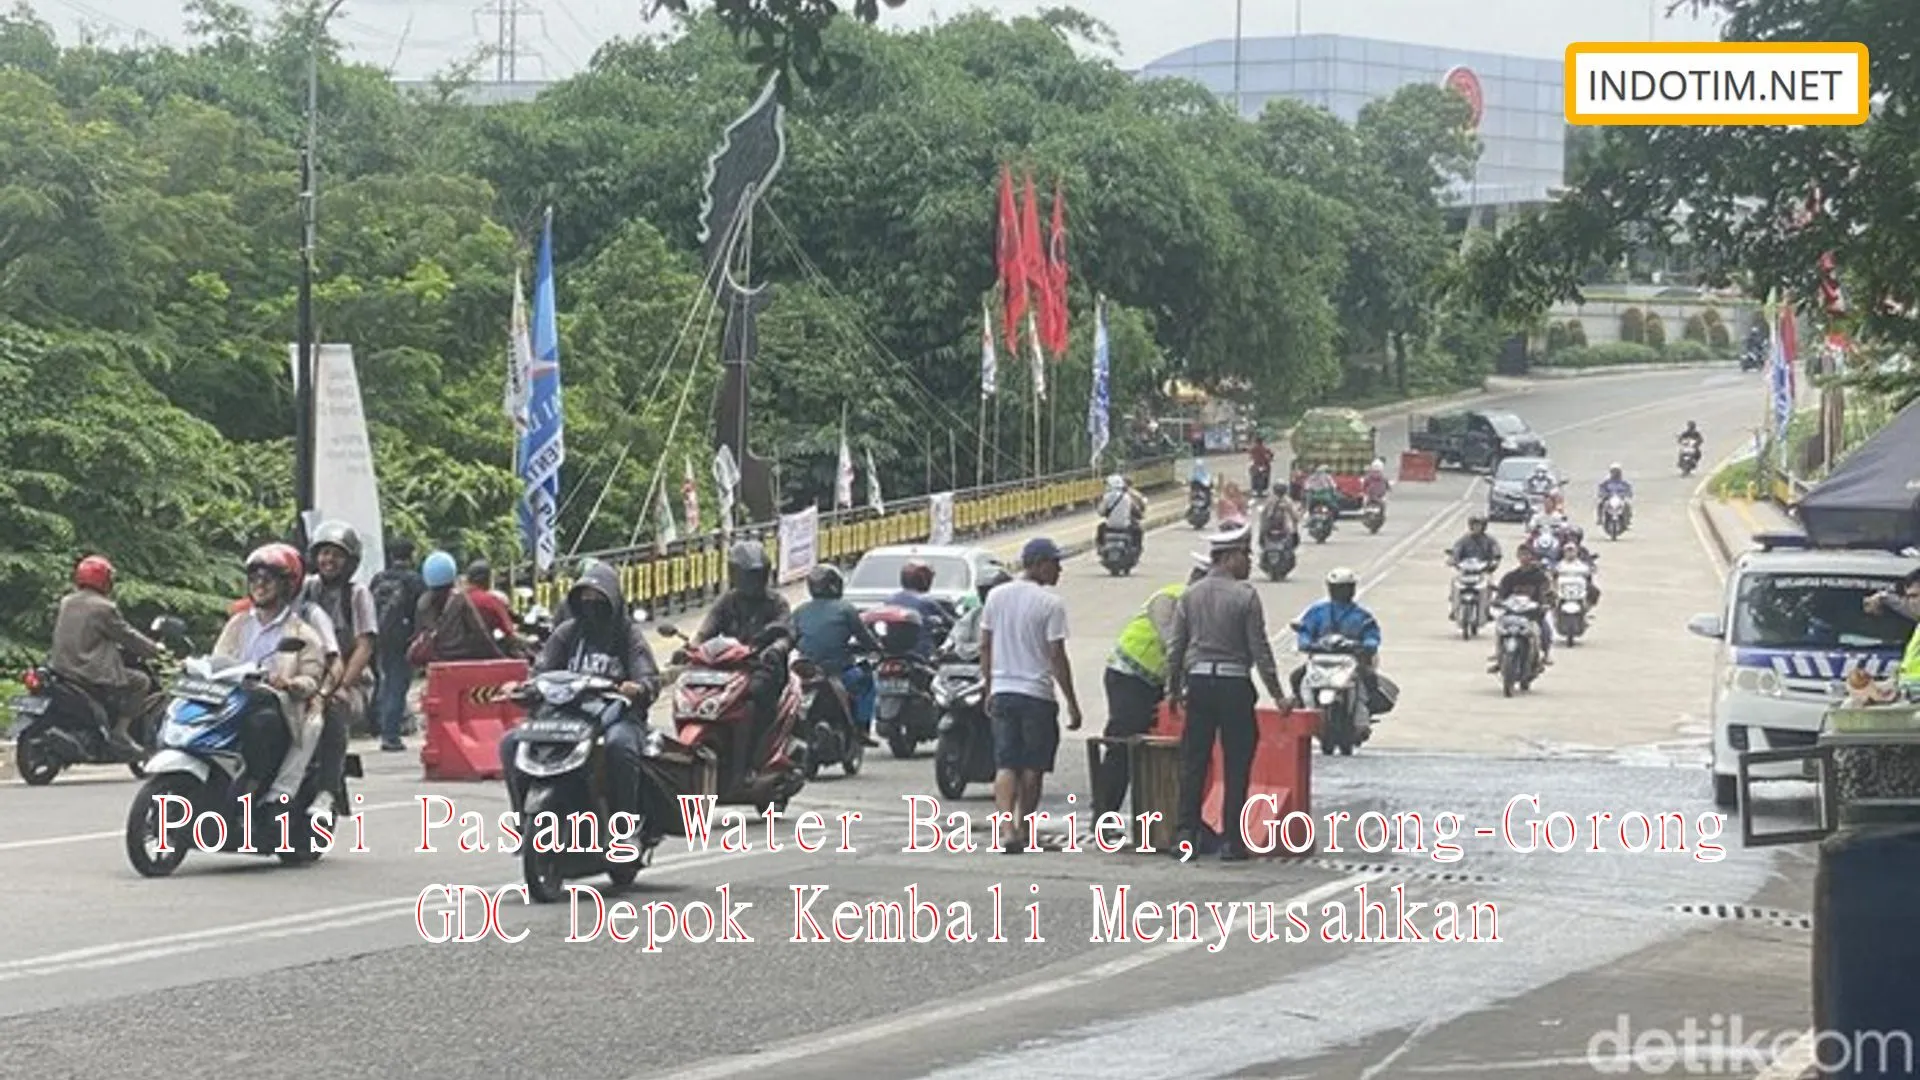 Polisi Pasang Water Barrier, Gorong-Gorong GDC Depok Kembali Menyusahkan